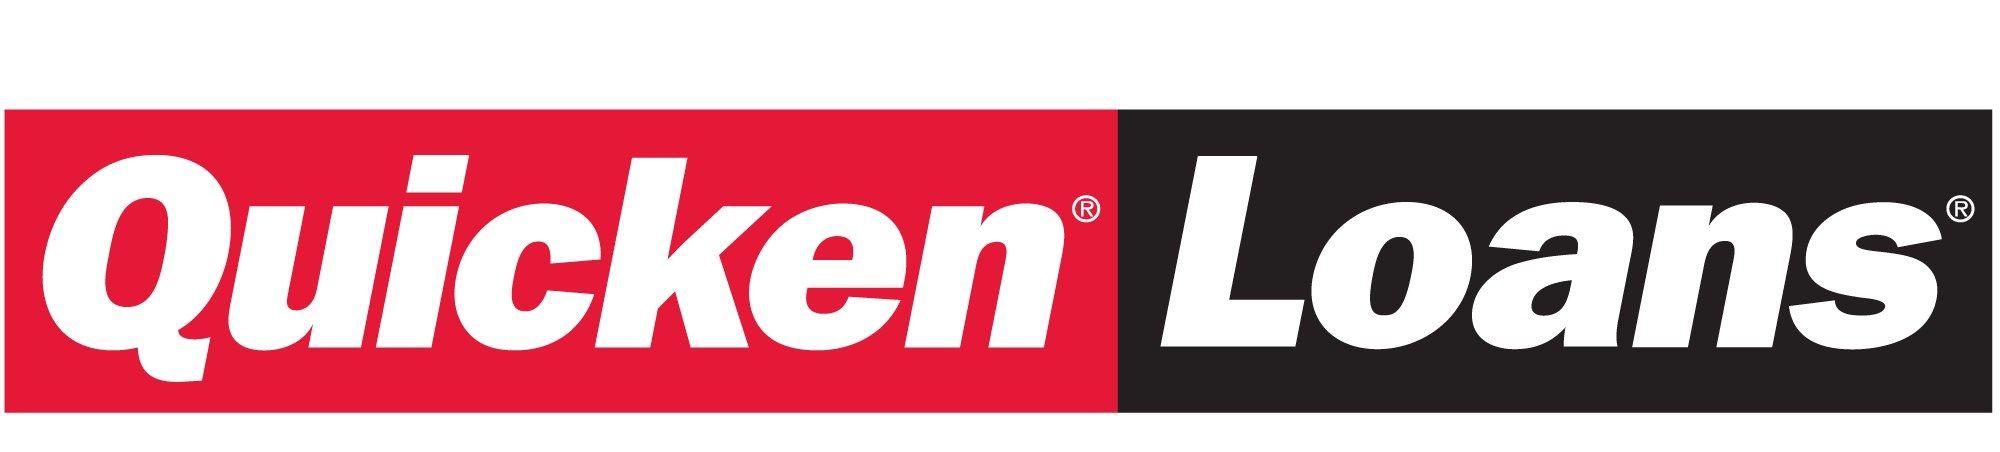 Quicken Mortgage Logo - Quicken loans Logos